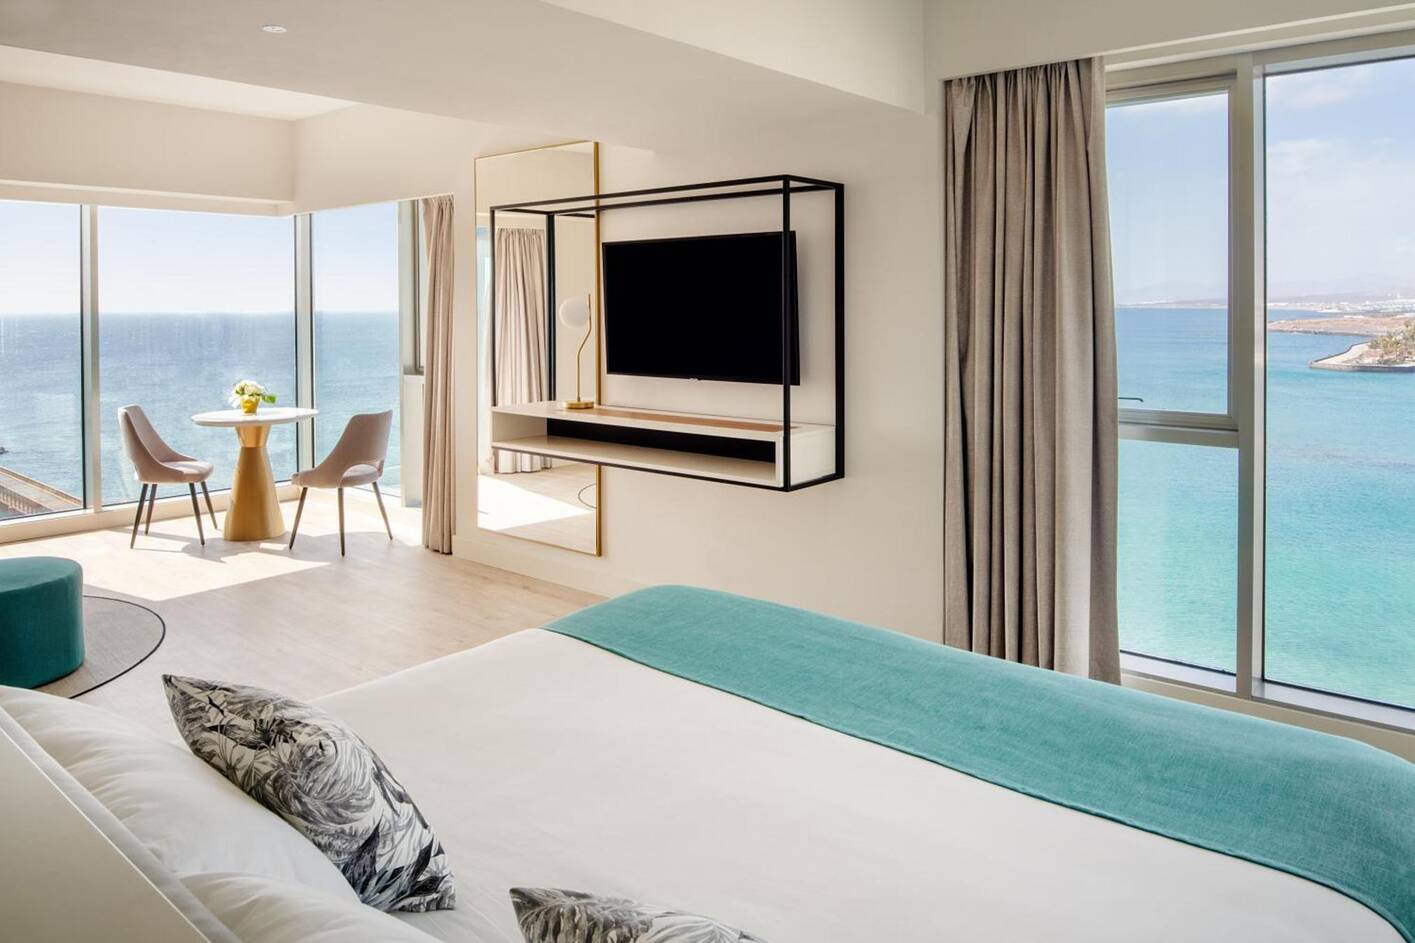 Arrecife Gran Hotel & Spa, best hotels hotels in lanzarote